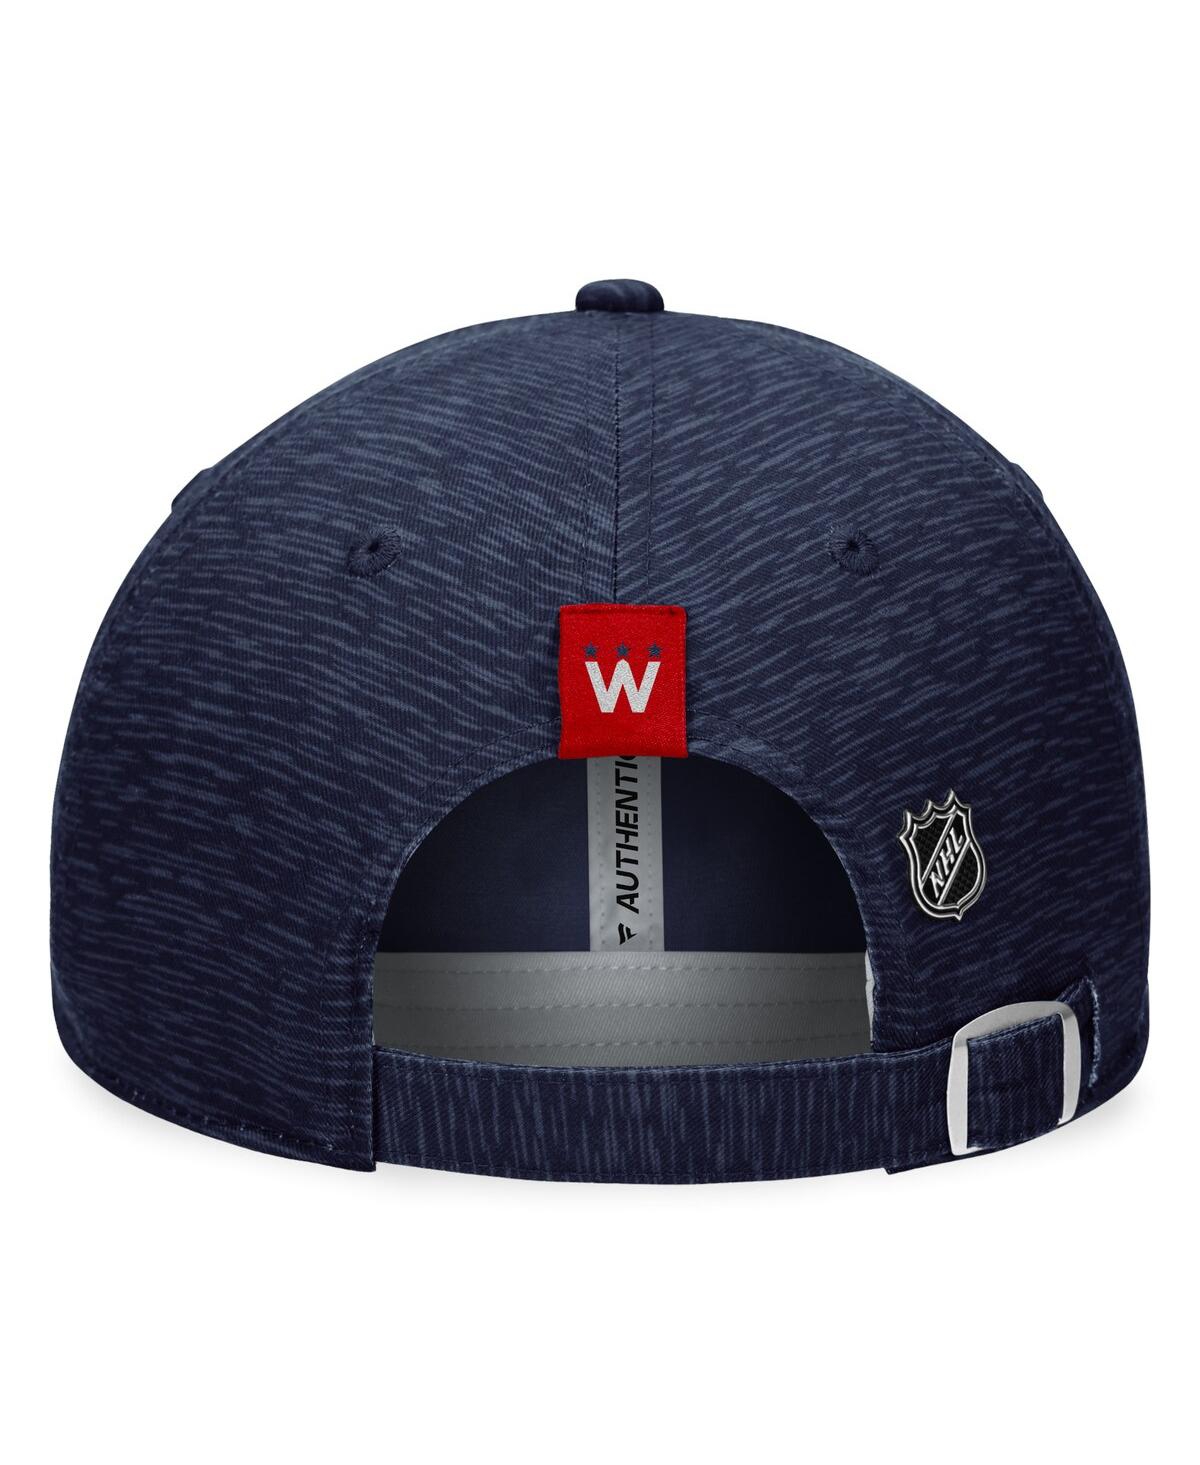 Shop Fanatics Men's  Navy Washington Capitals Authentic Pro Road Adjustable Hat